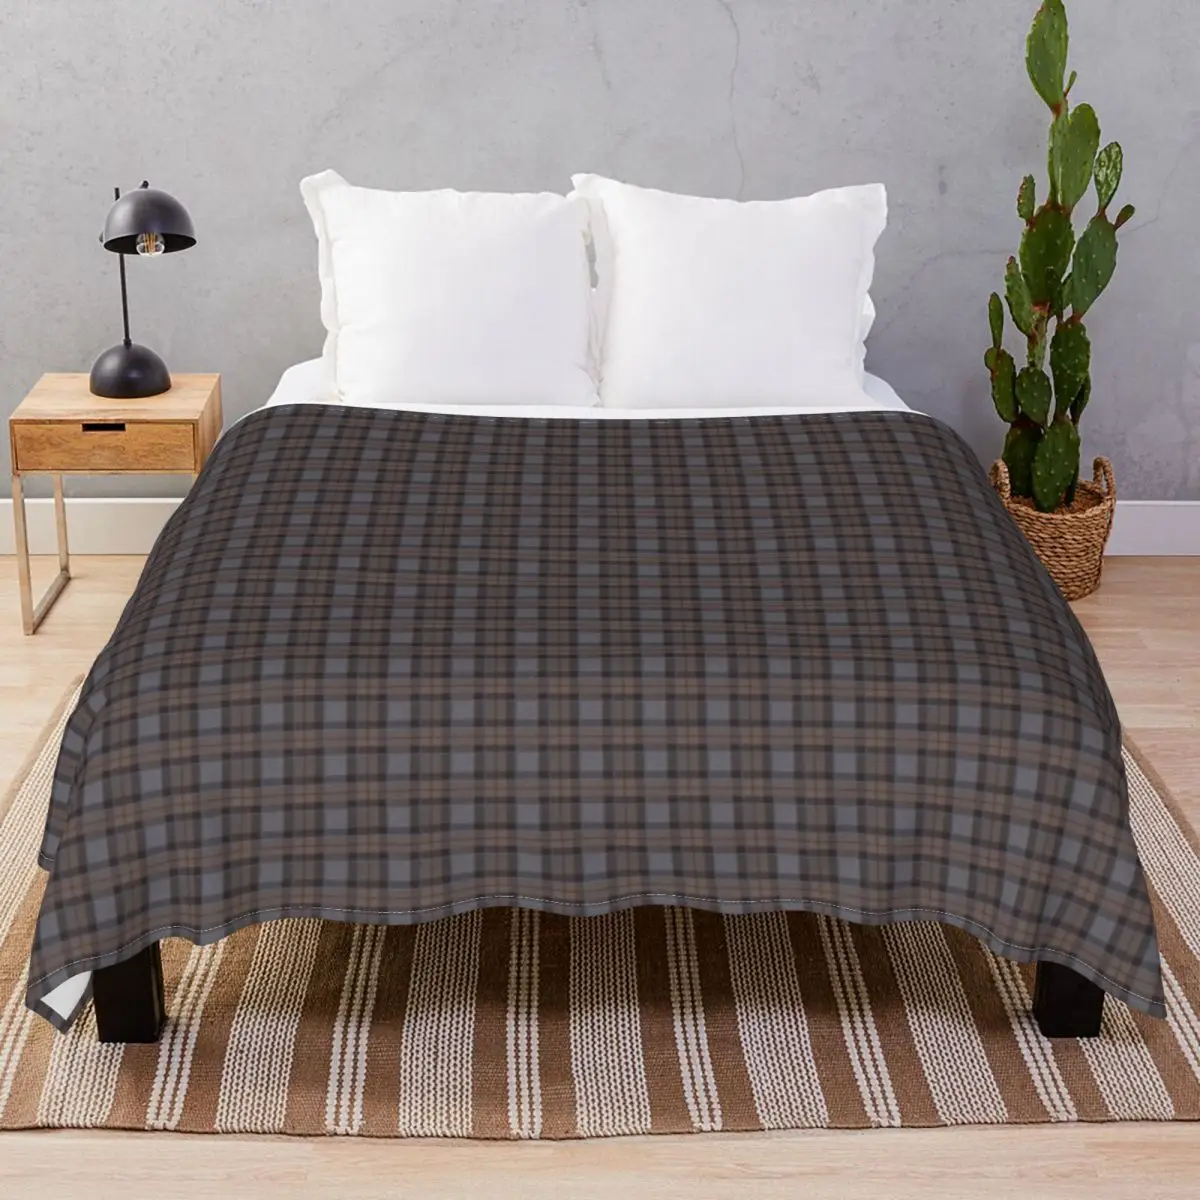 Outlander Tartan Fraser Tartan Blankets Flannel Textile Decor Super Soft Throw Blanket for Bedding Sofa Camp Cinema